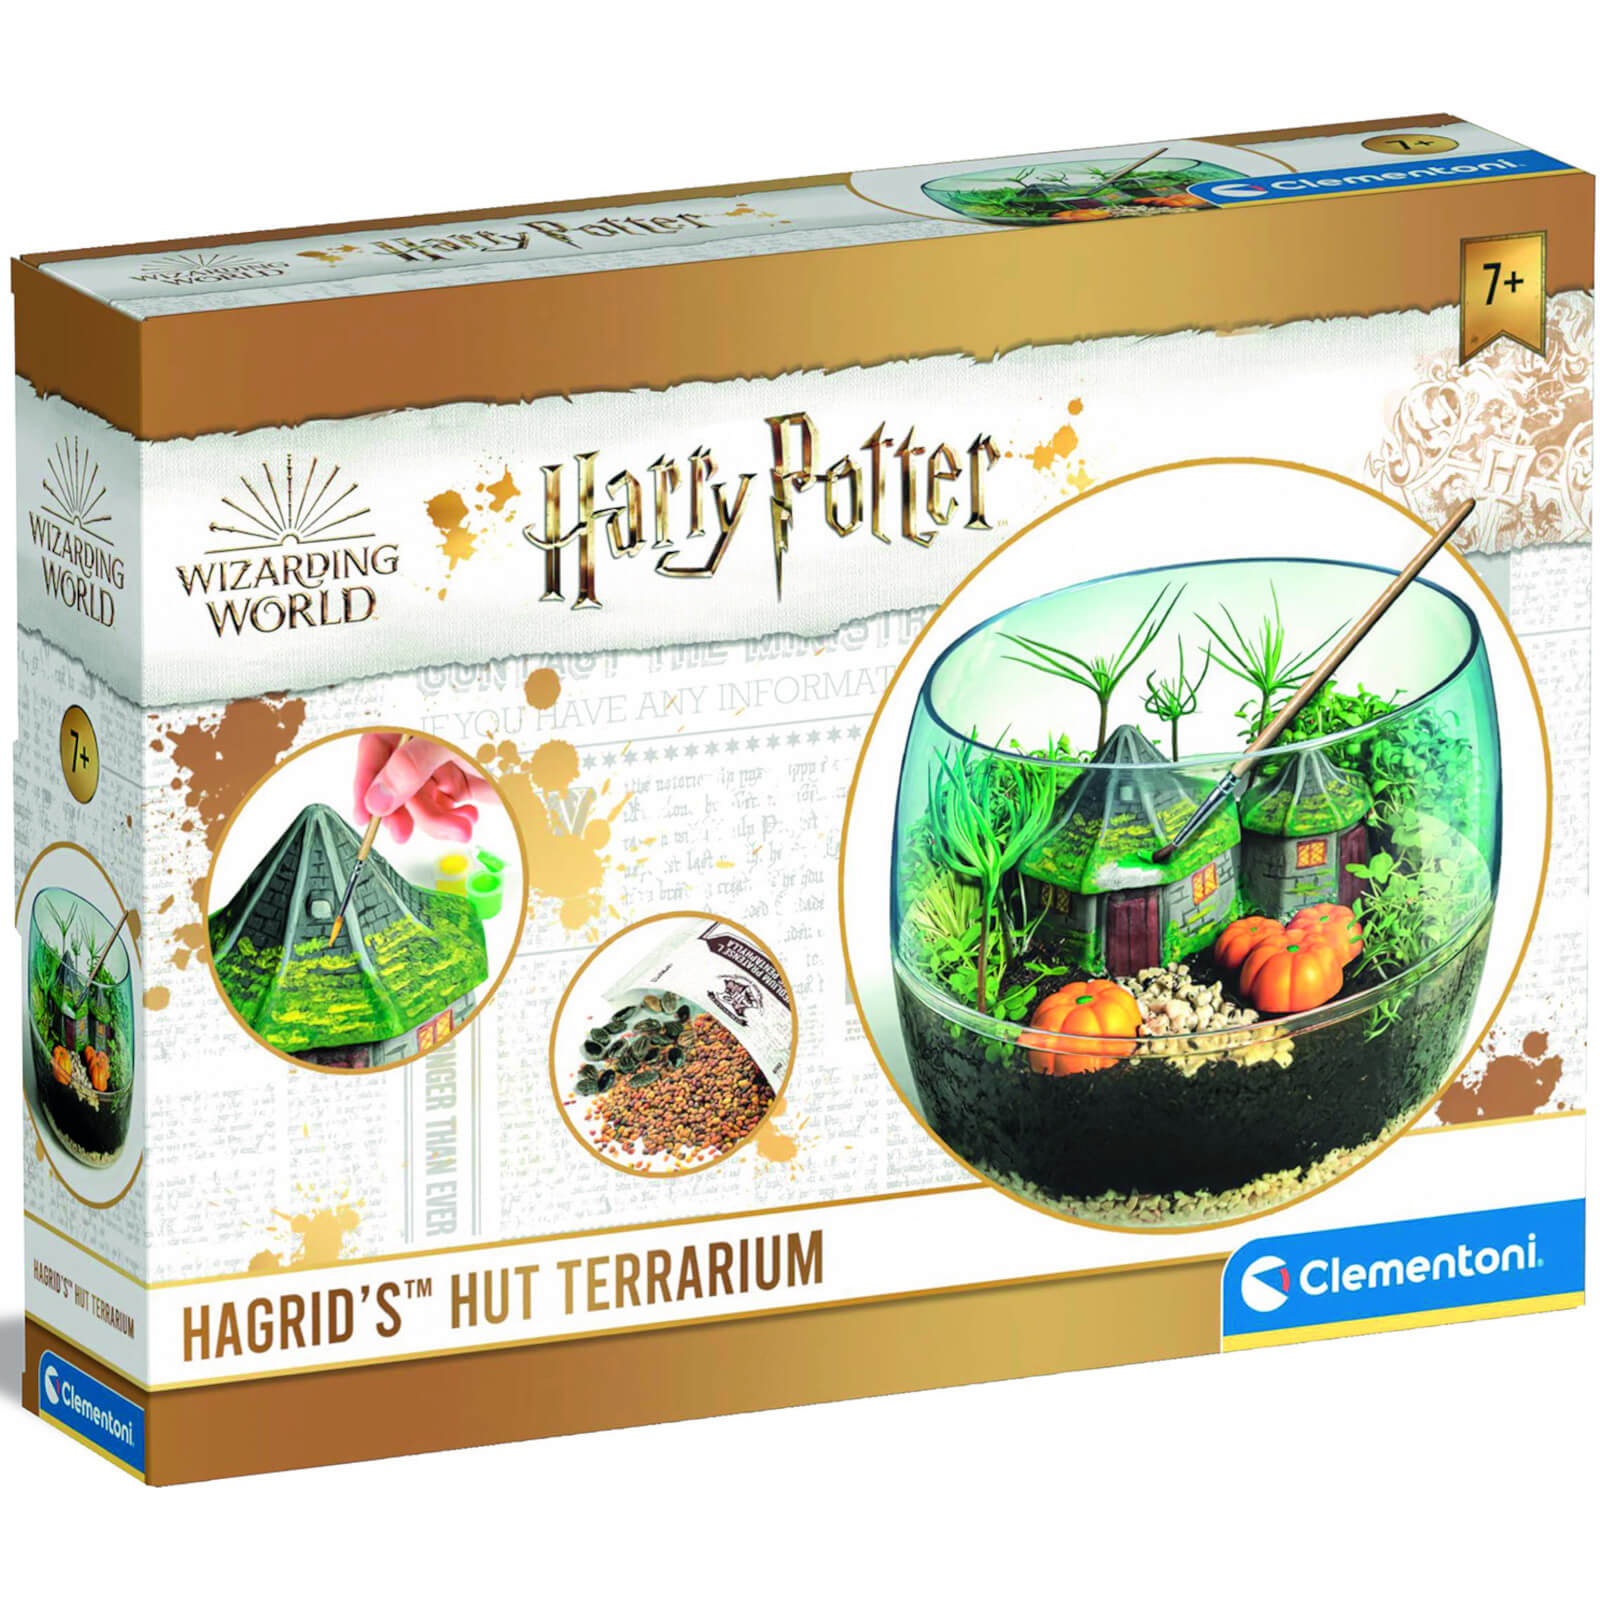 NEW Clementoni Harry Potter Hagrid's Hut Terrarium